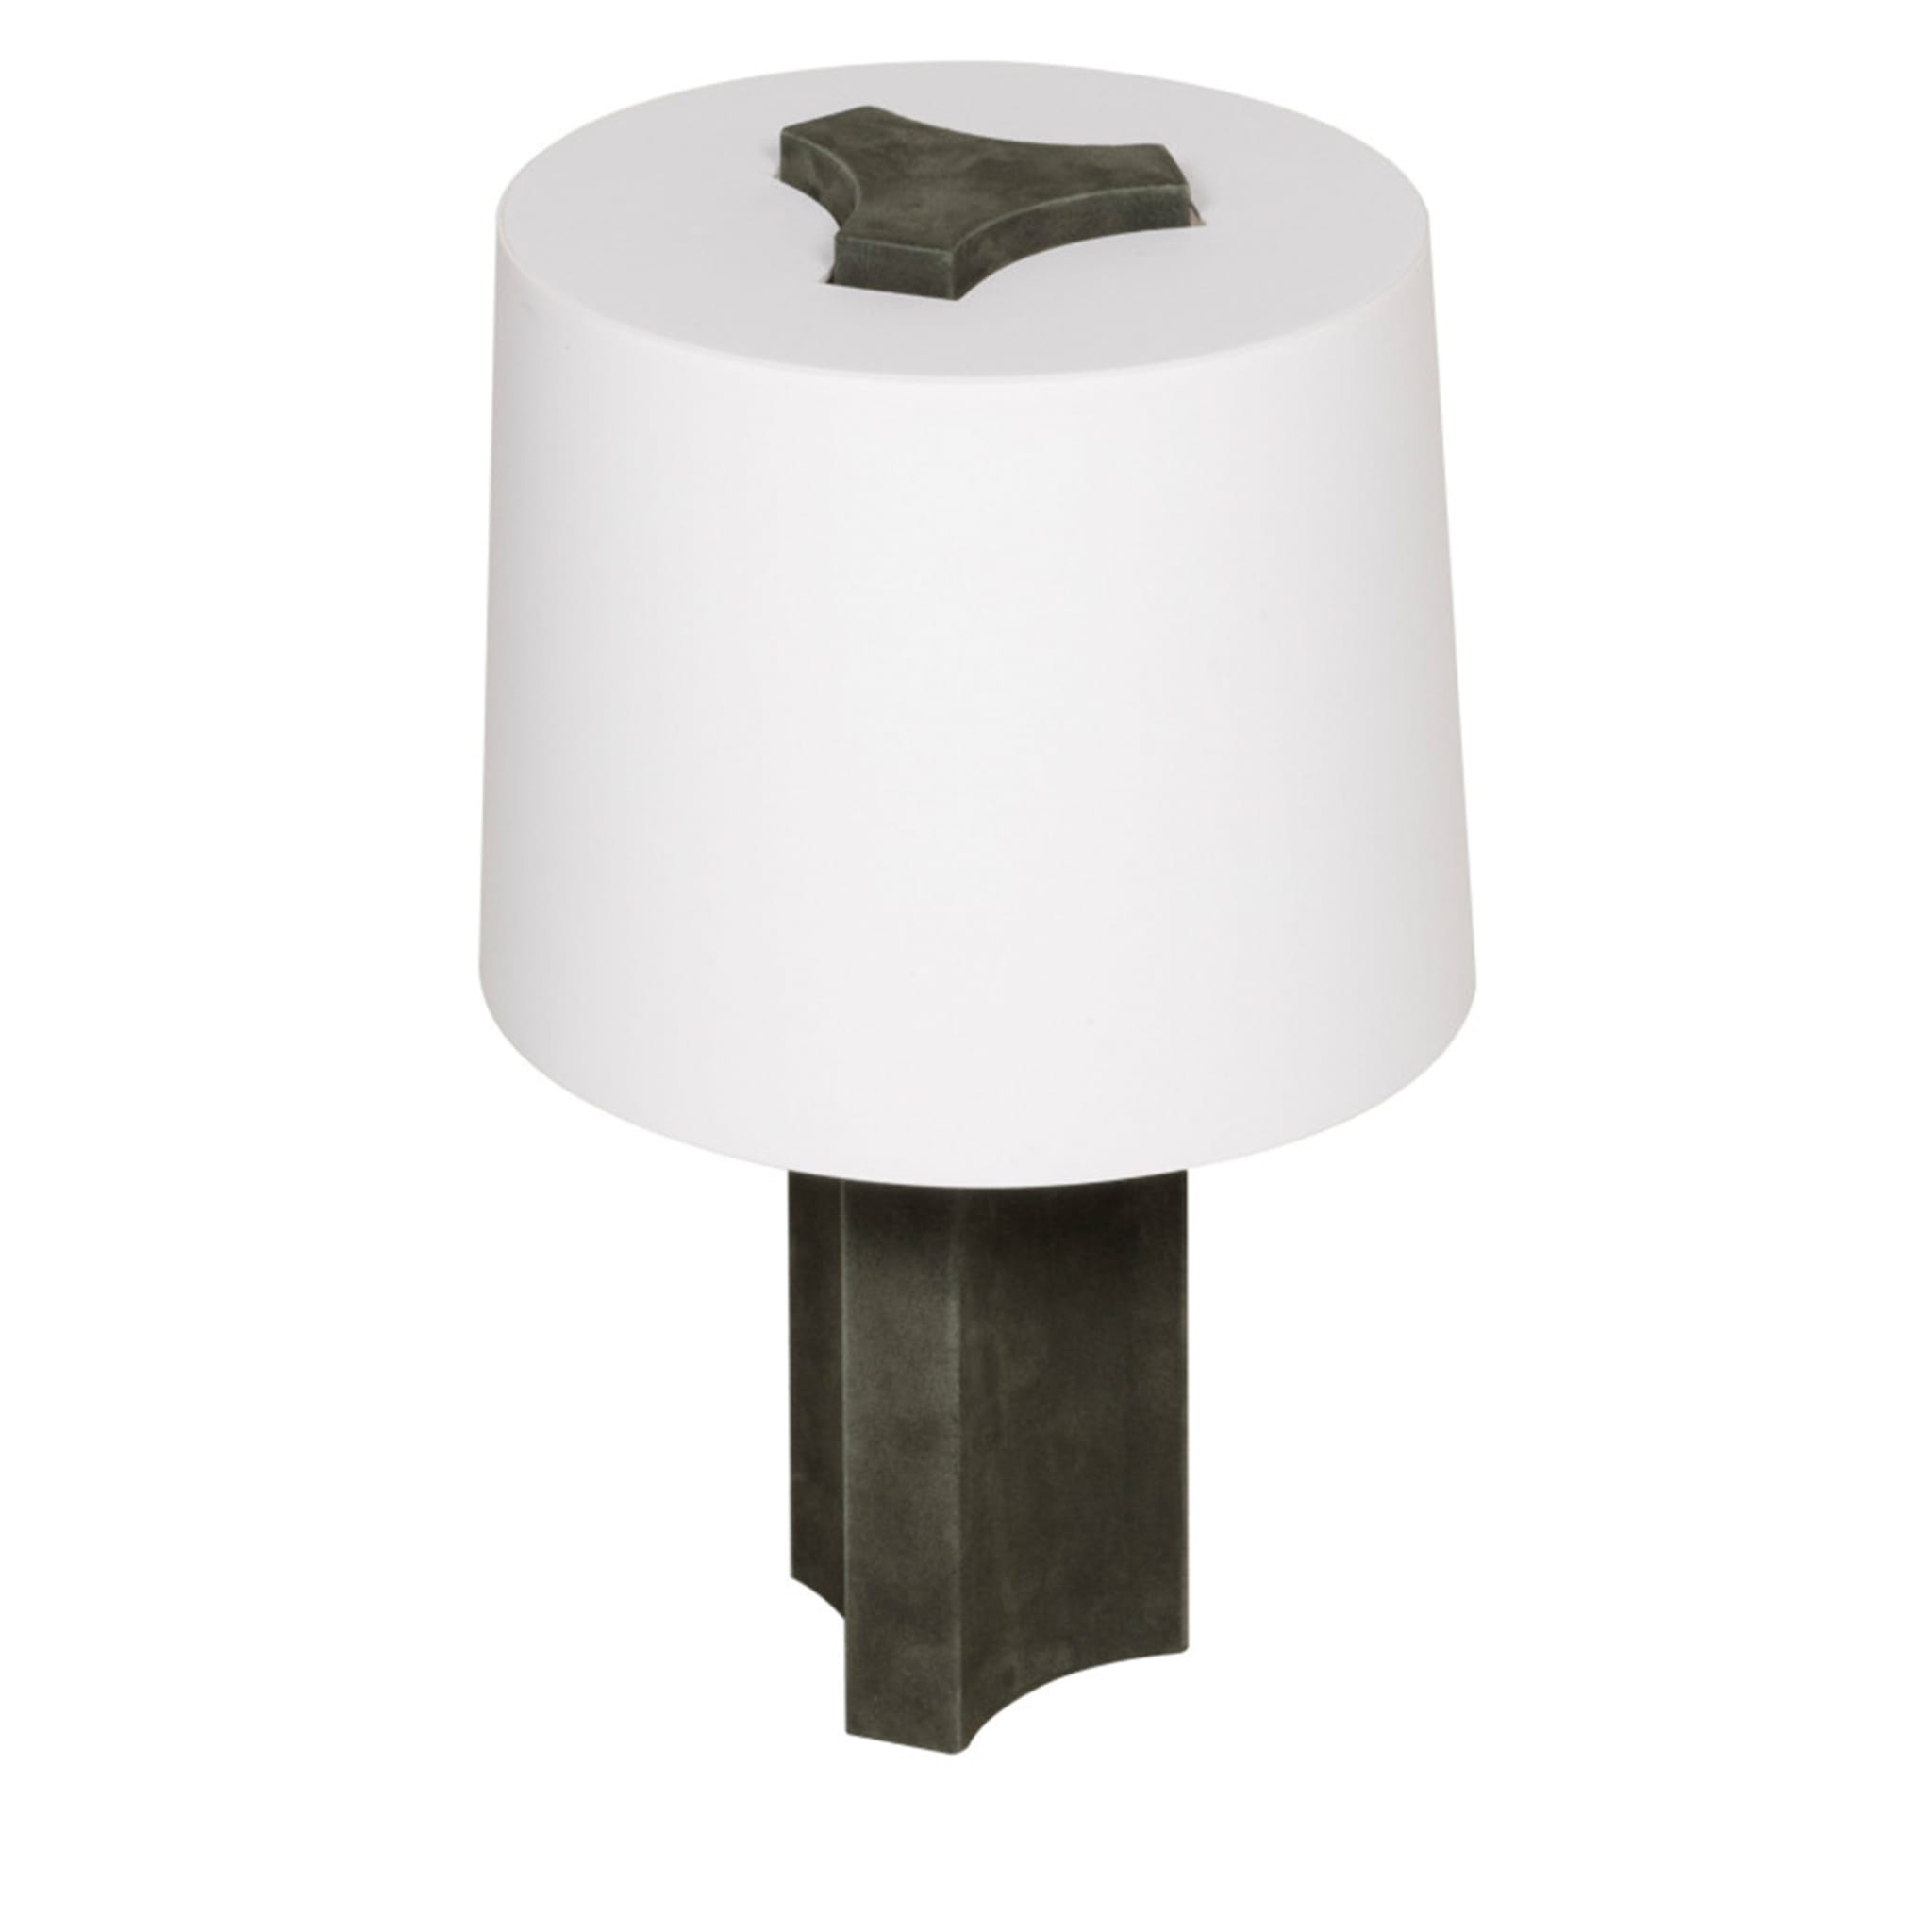 Enea Table Lamp - Small - Alternative view 2